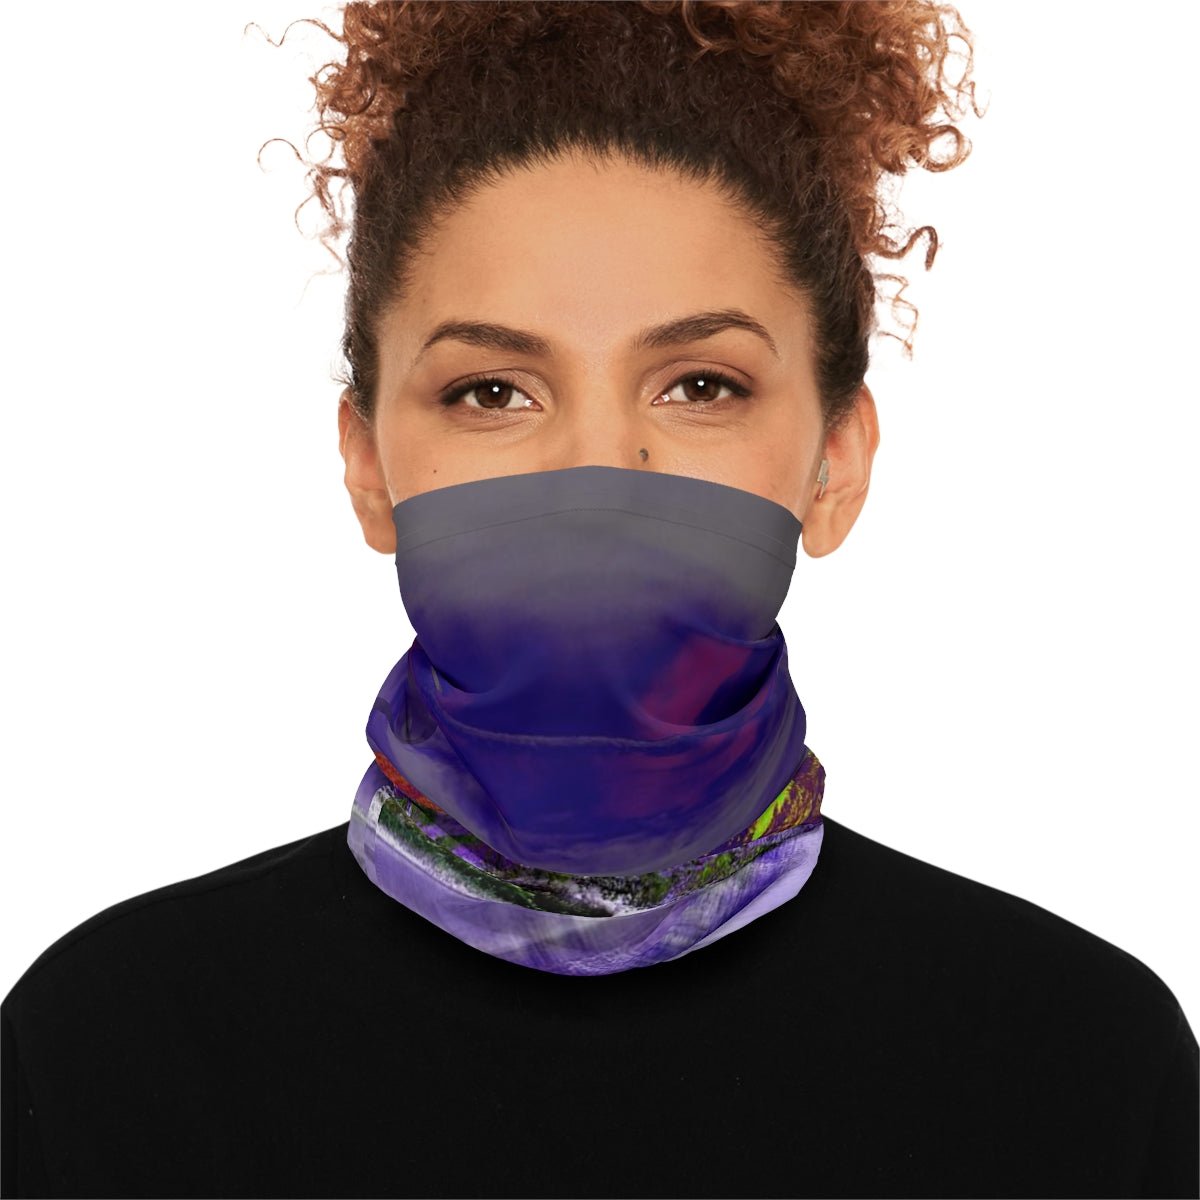 Fashionable Neck Gaiter For Women Girls Men - Multi-Purpose UPF 50+ UV+ Full Face Mask Buff Balaclava Purple Mtn - Studio40ParkLane